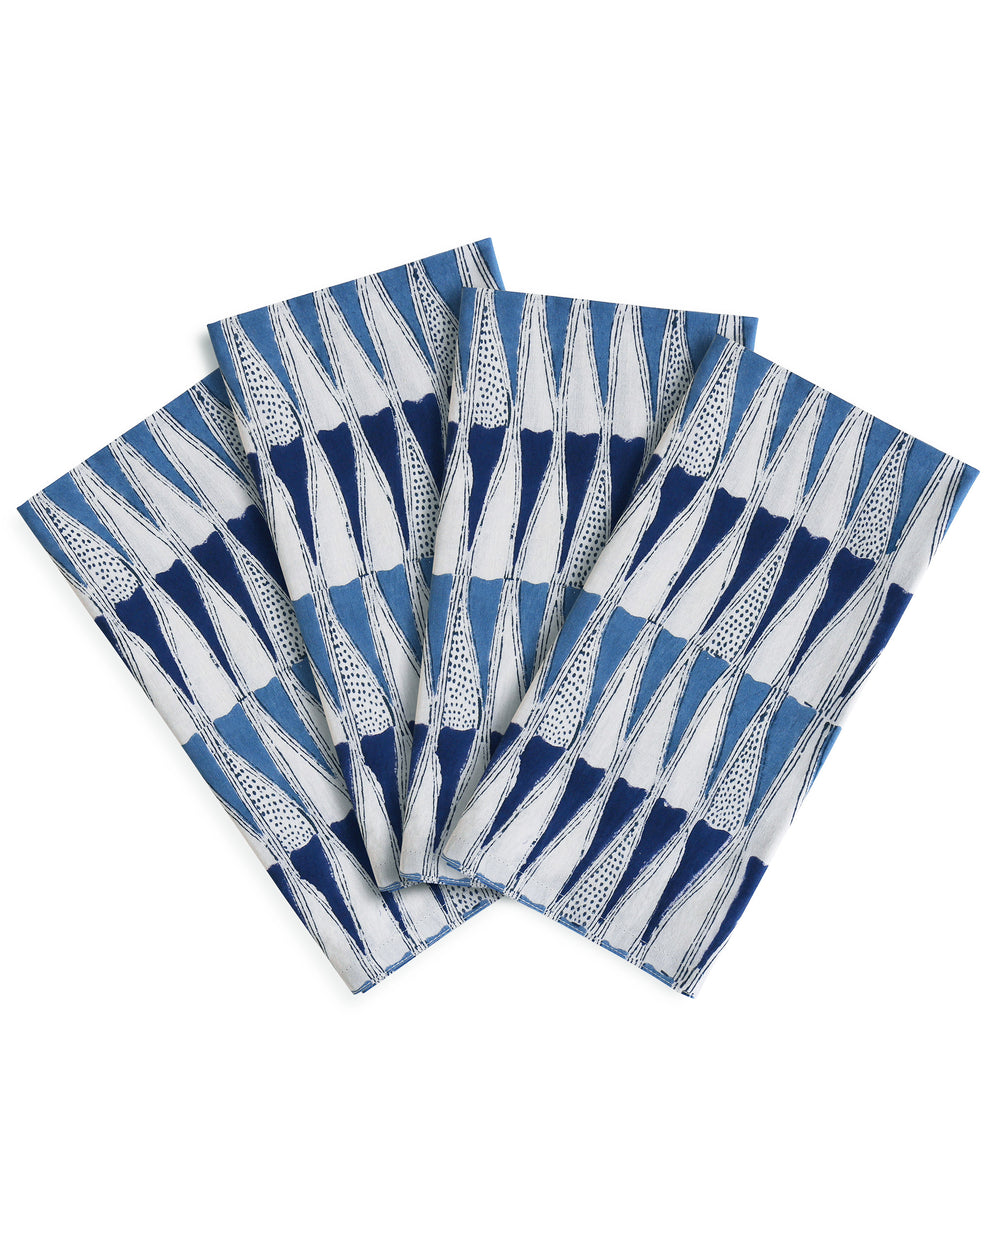 Tangier Denim cotton napkins (set of 4)